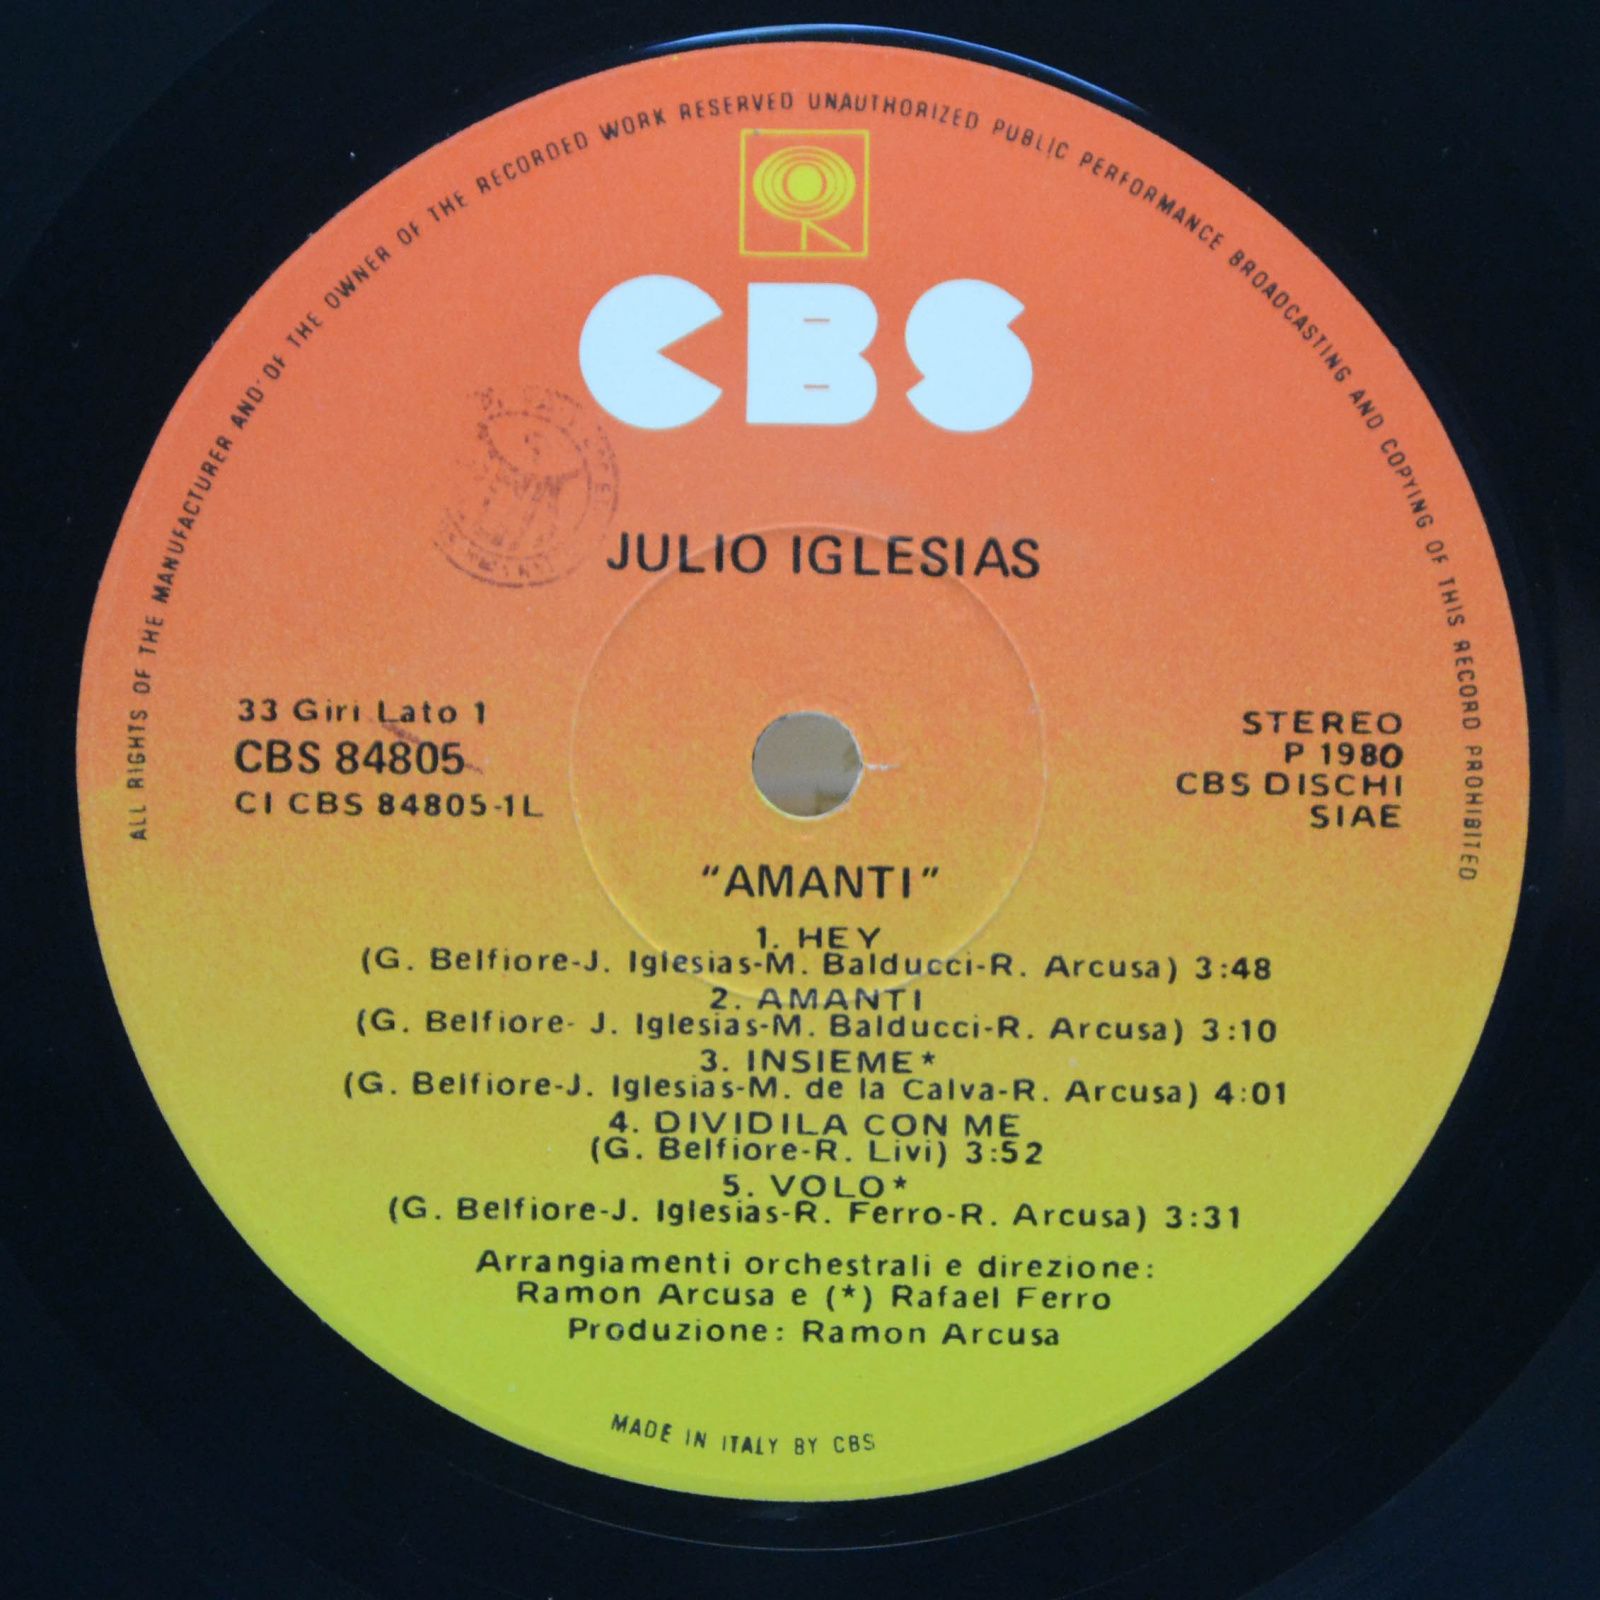 Julio Iglesias — Amanti, 1981